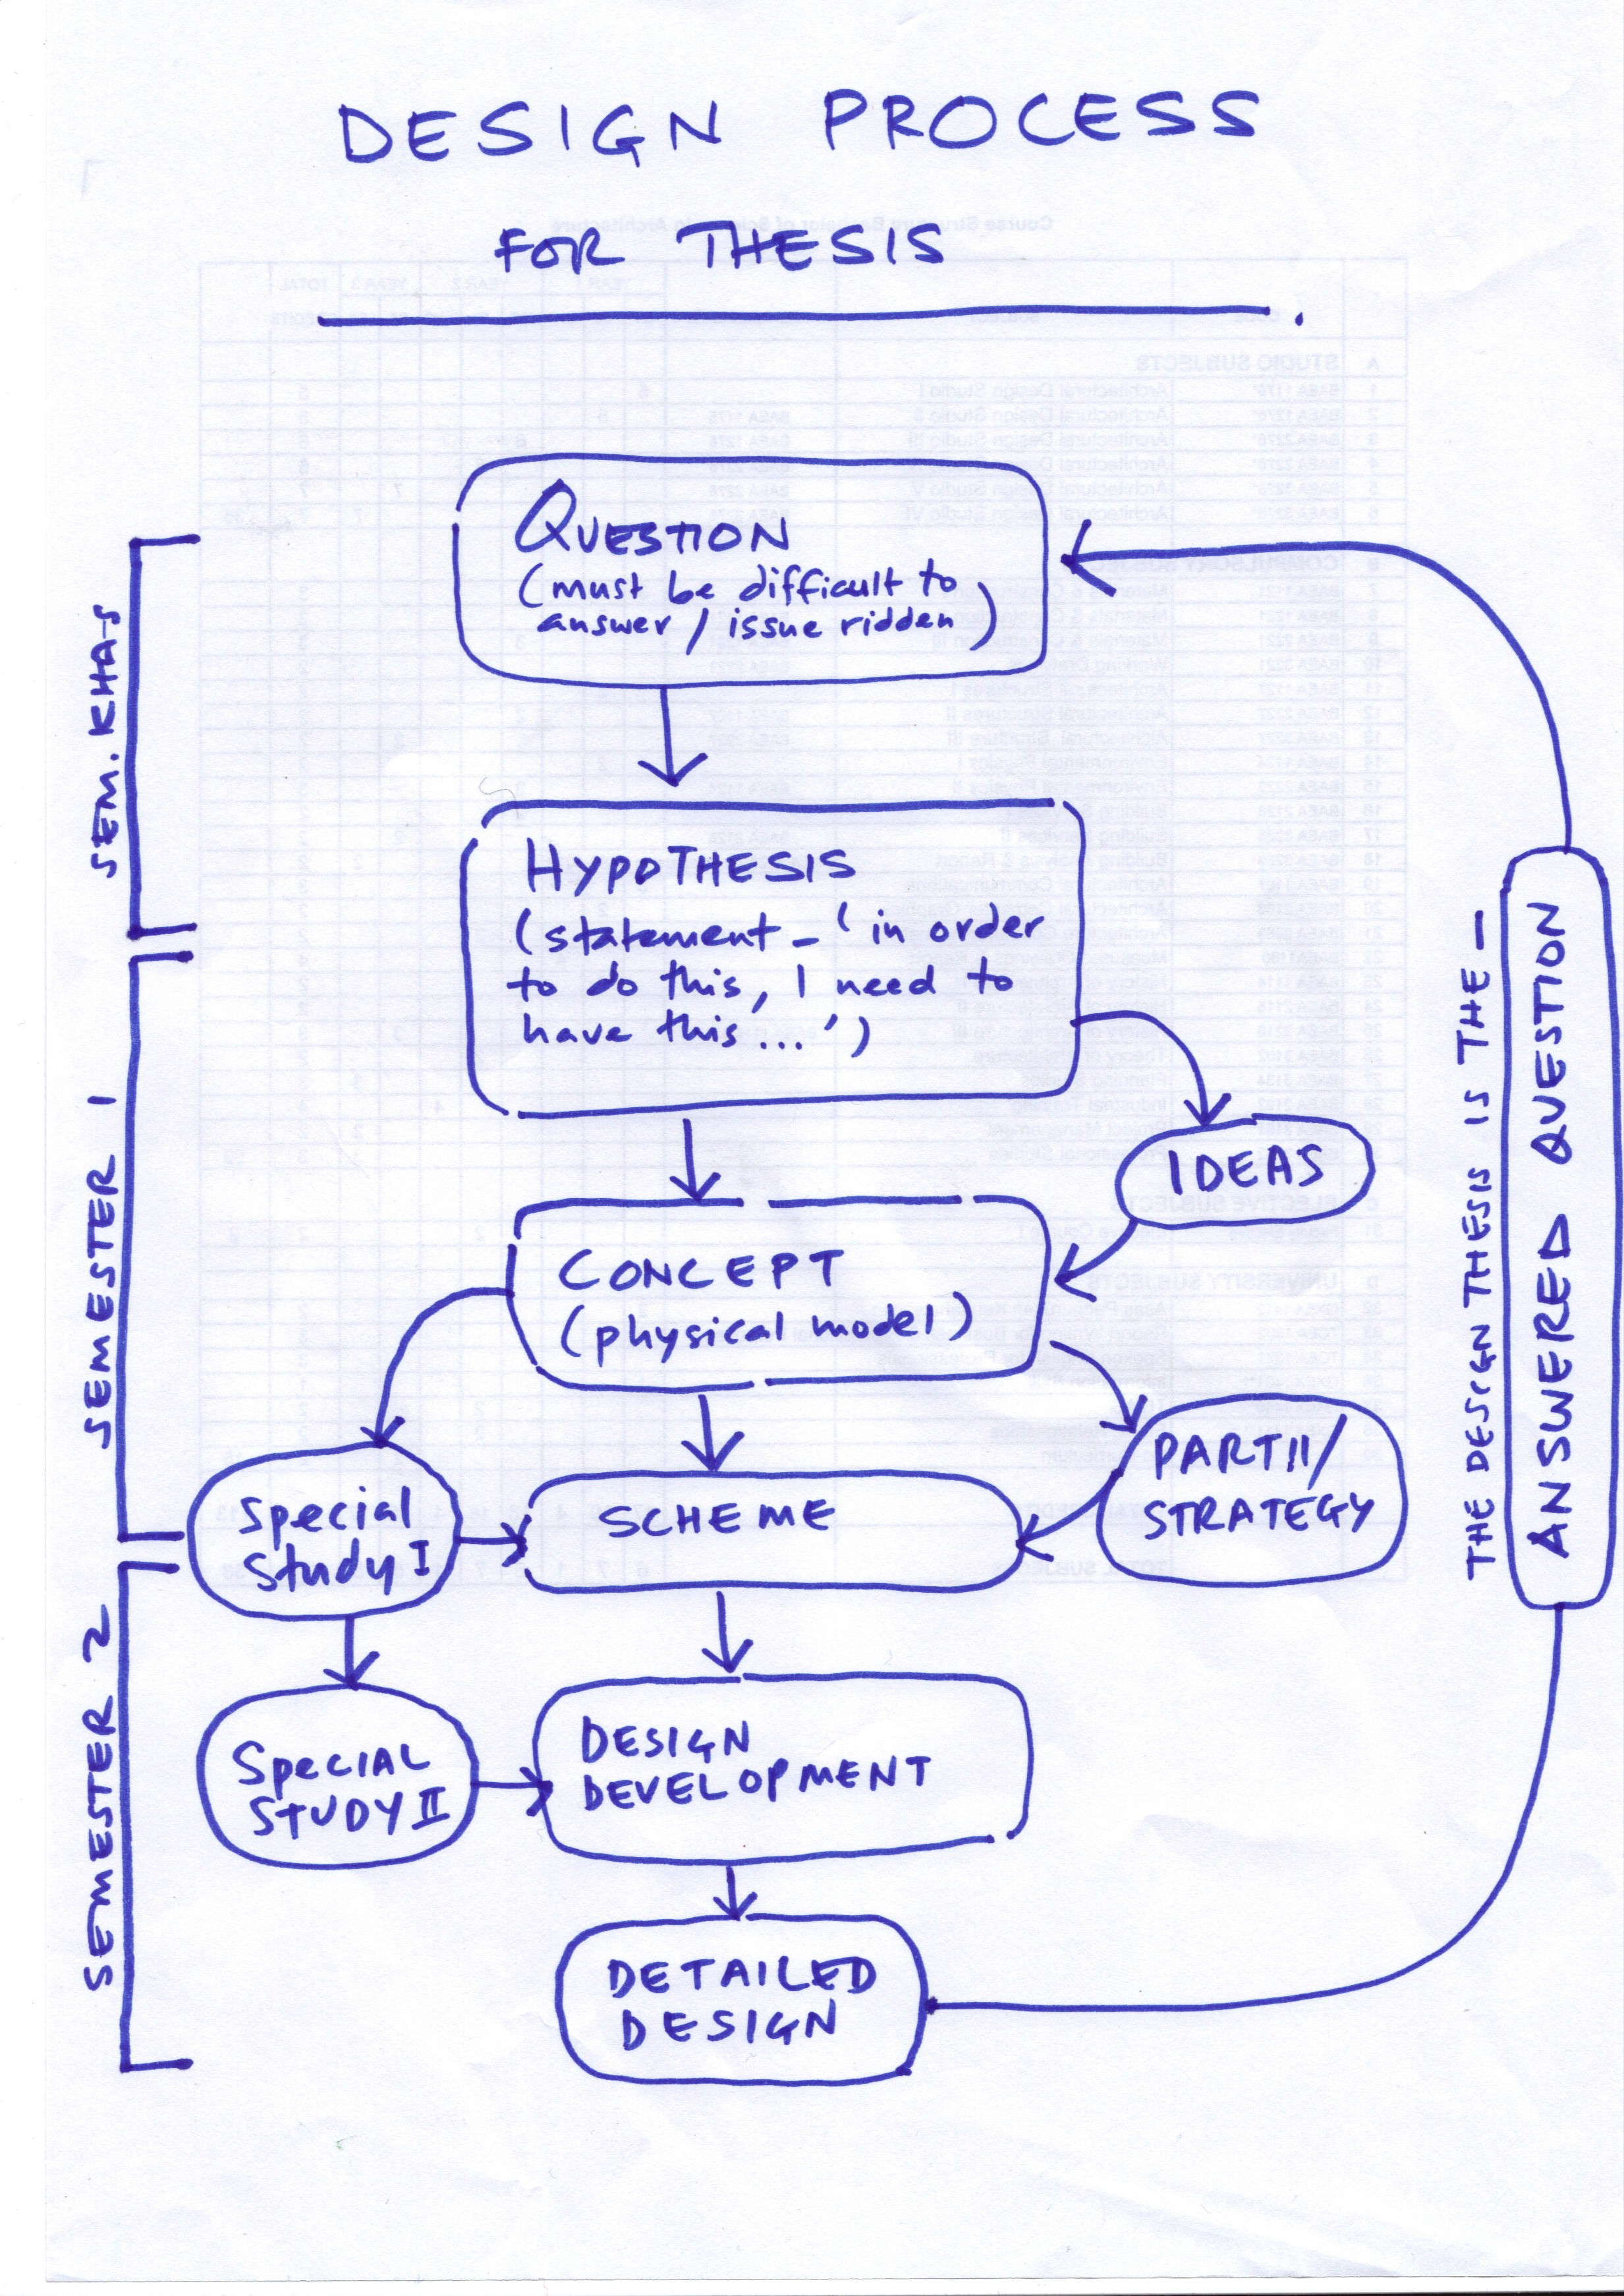 Design Process Diagram